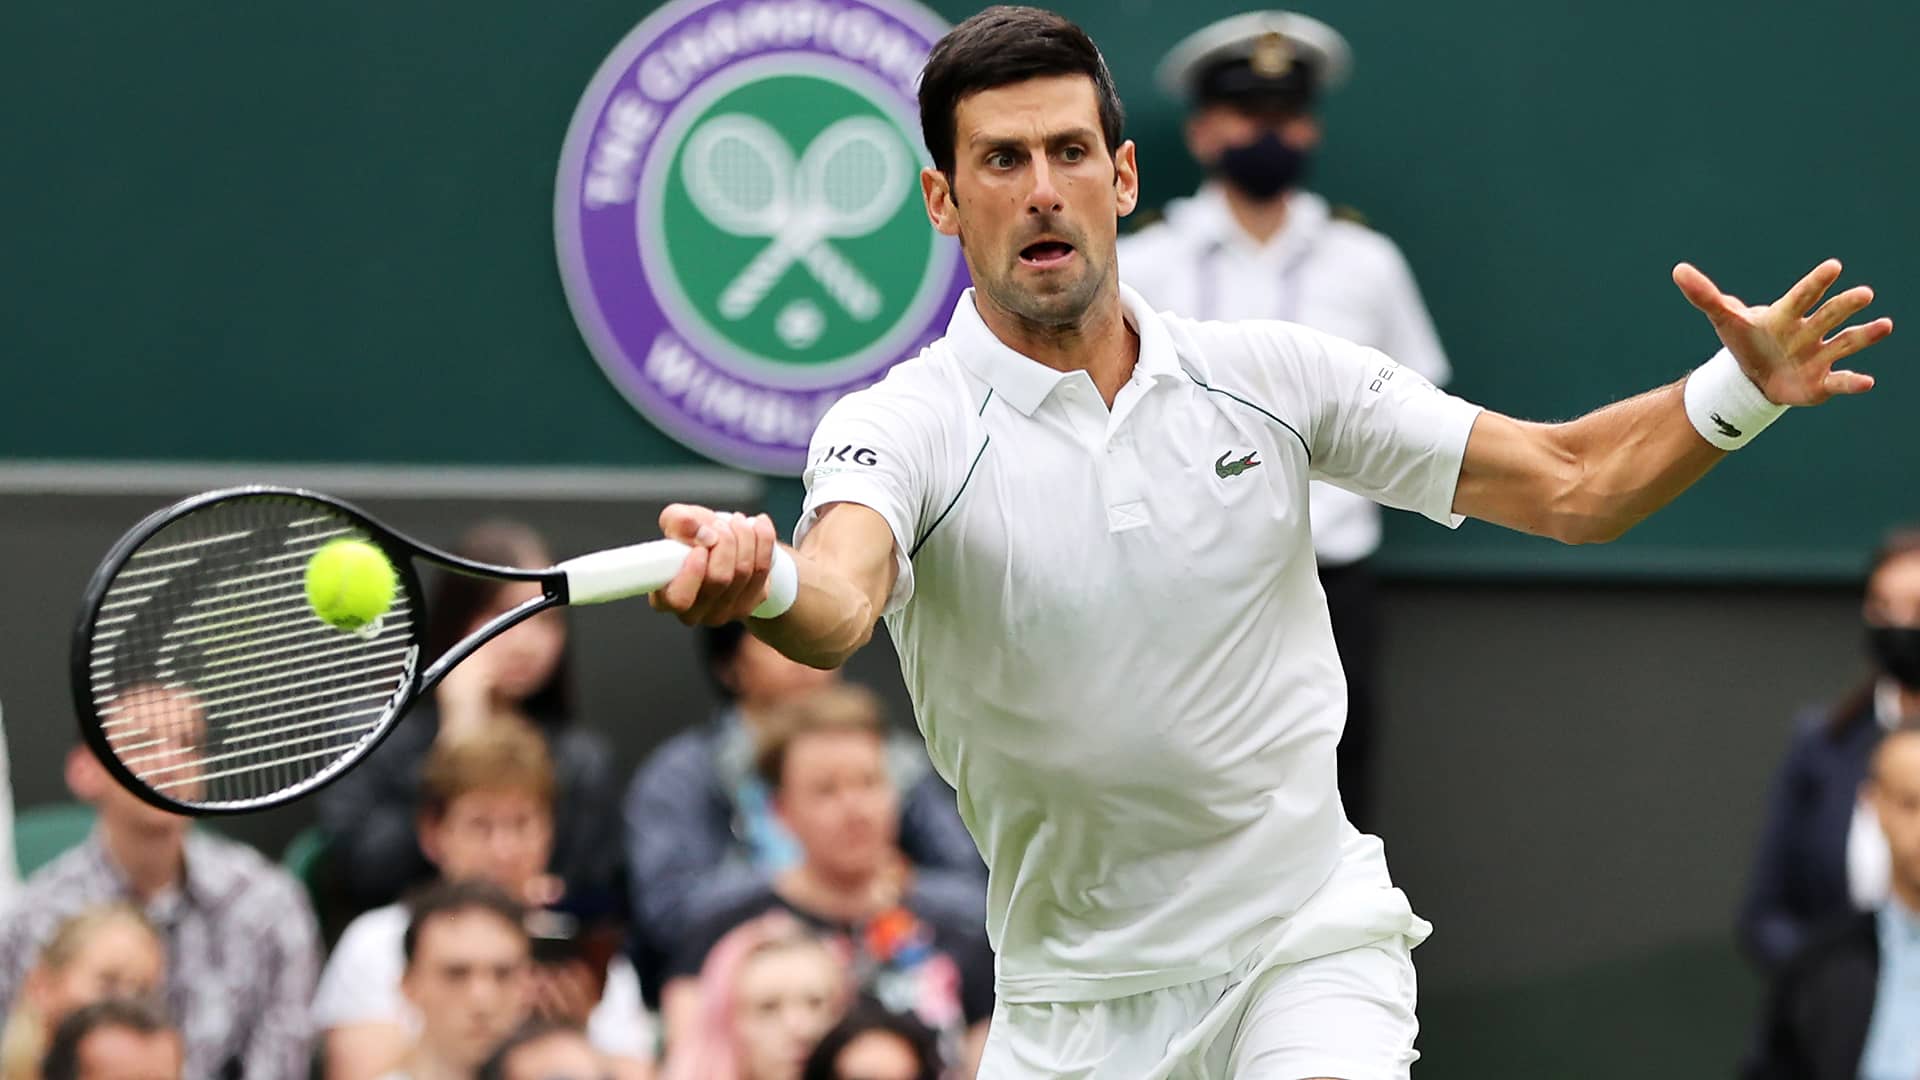 Wimbledon 2021 LIVE Novak Djokovic through to last 16, beats Kudla